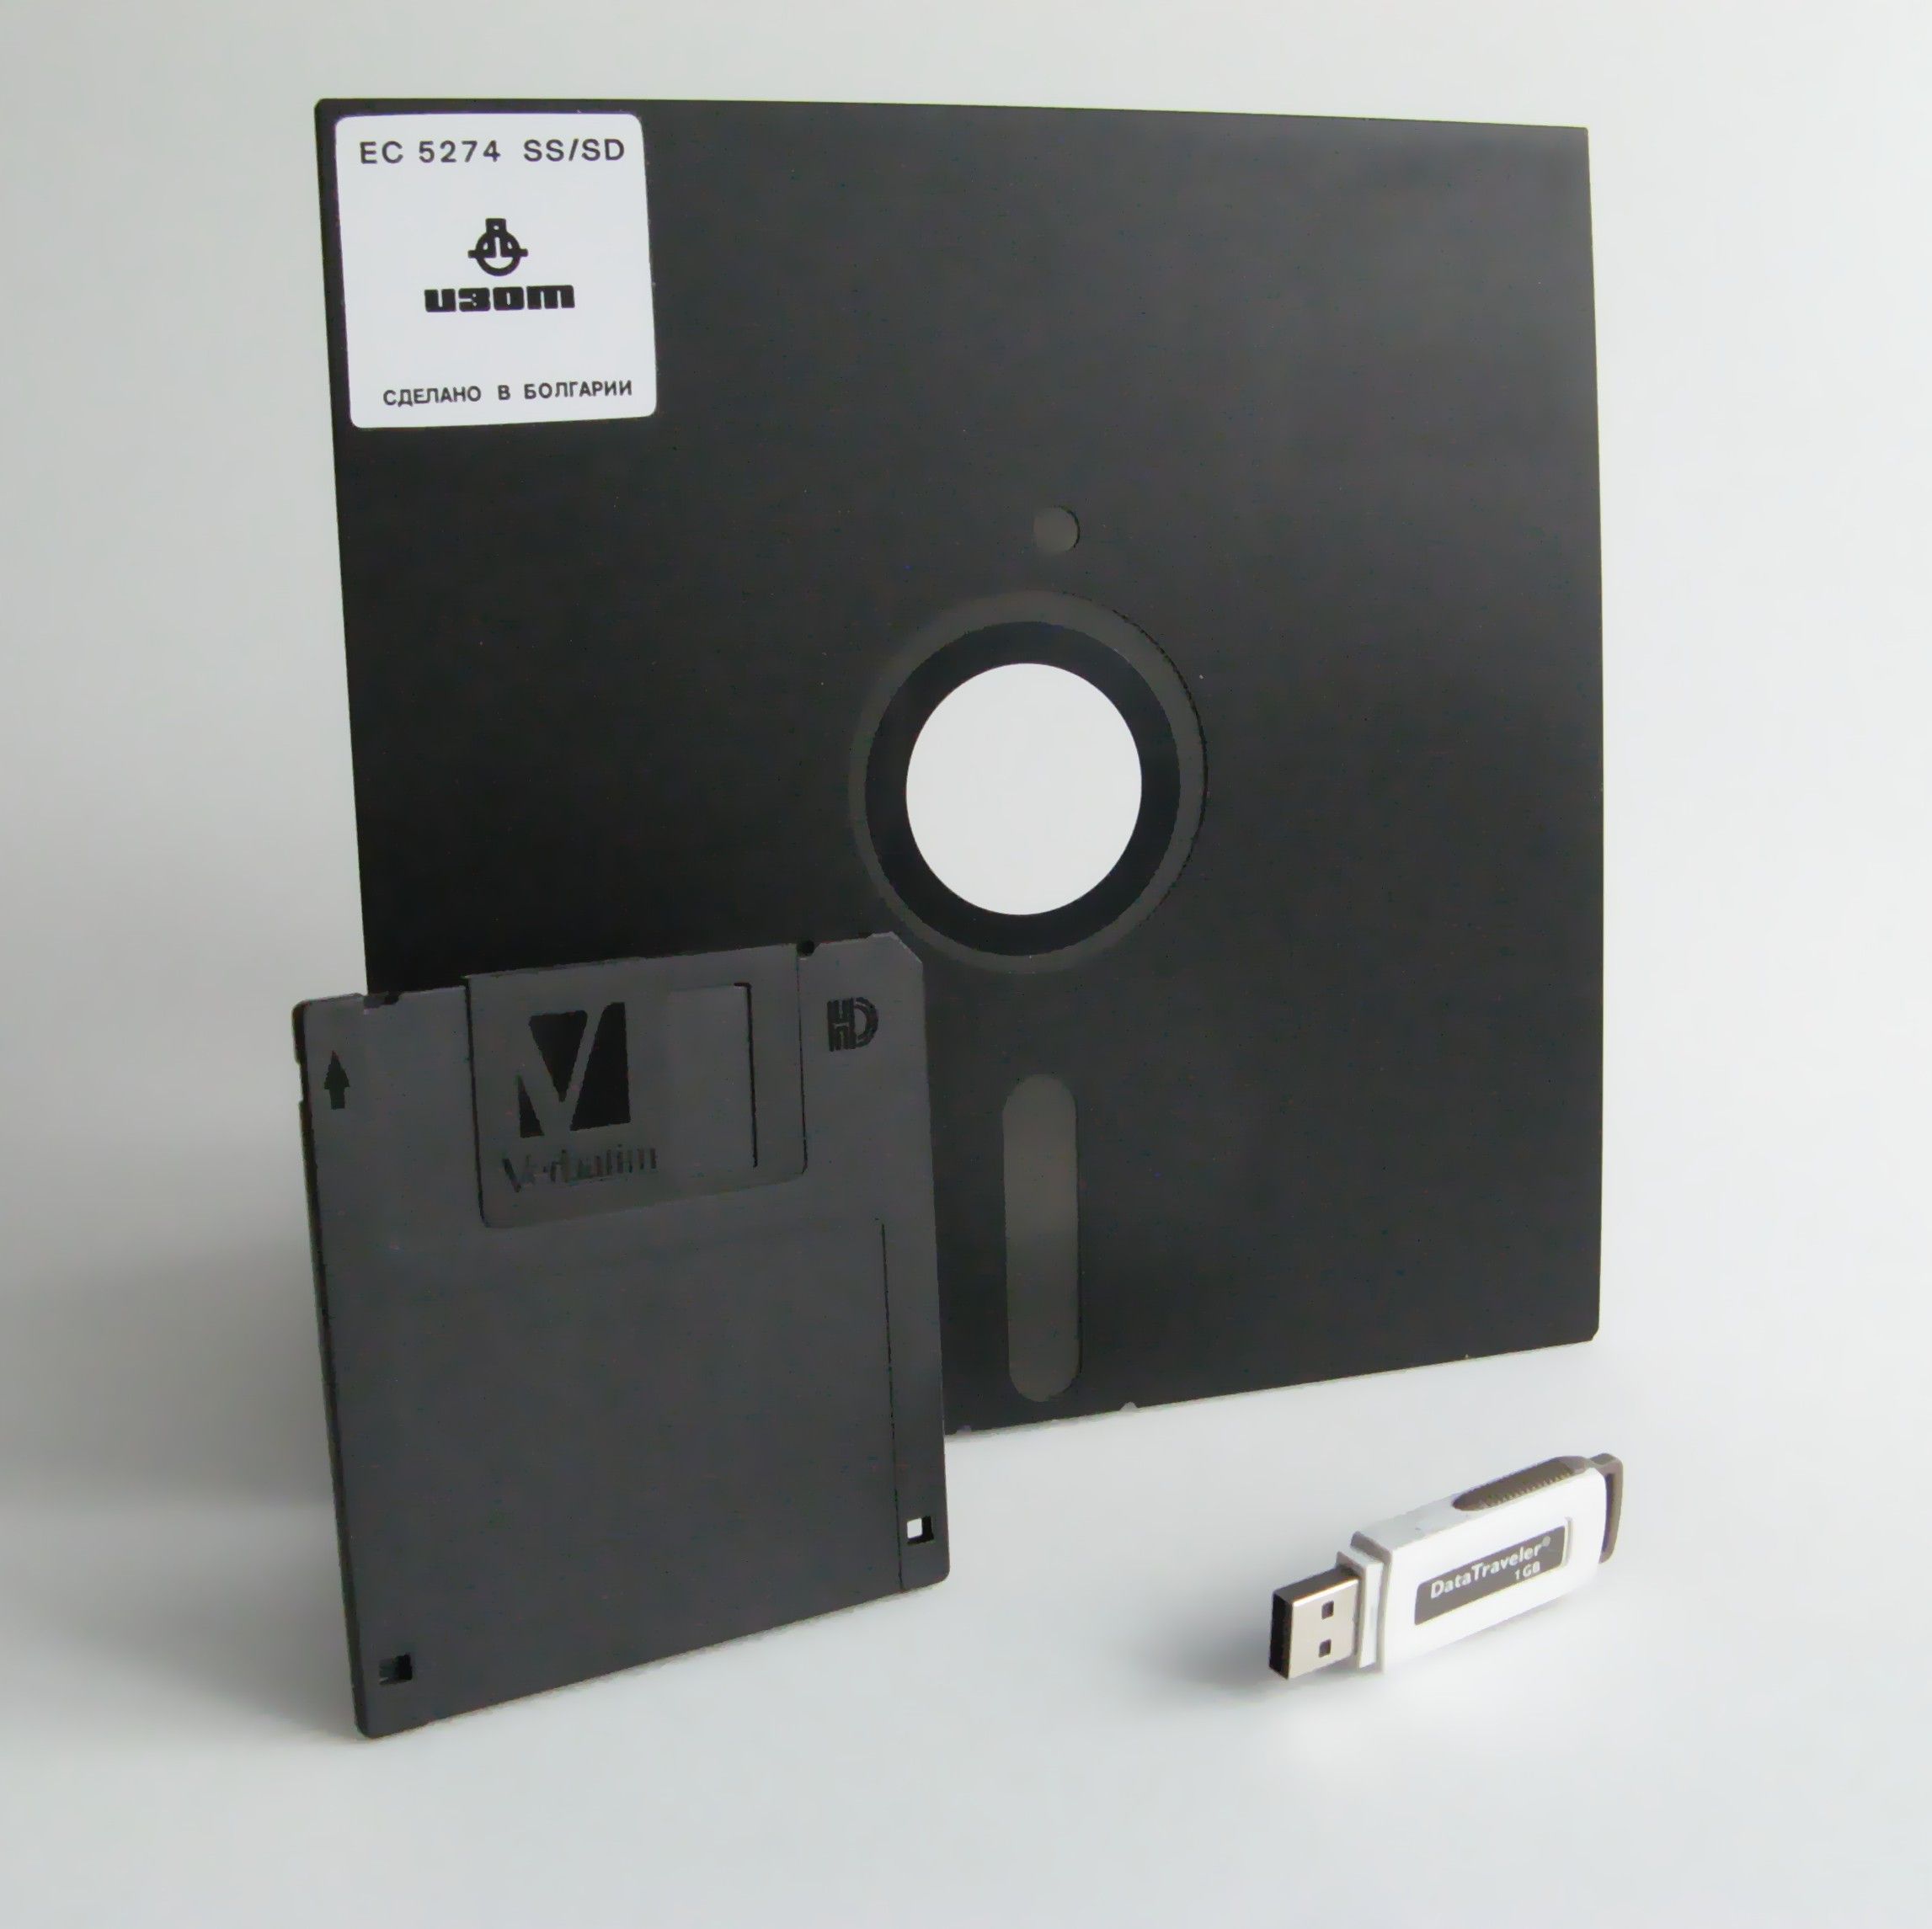 Накопители гибких. Флоппи диск 3.5. НГМД 5.25. Дискеты 3.5" +Denon. Диск дискета (флоппи диск)..